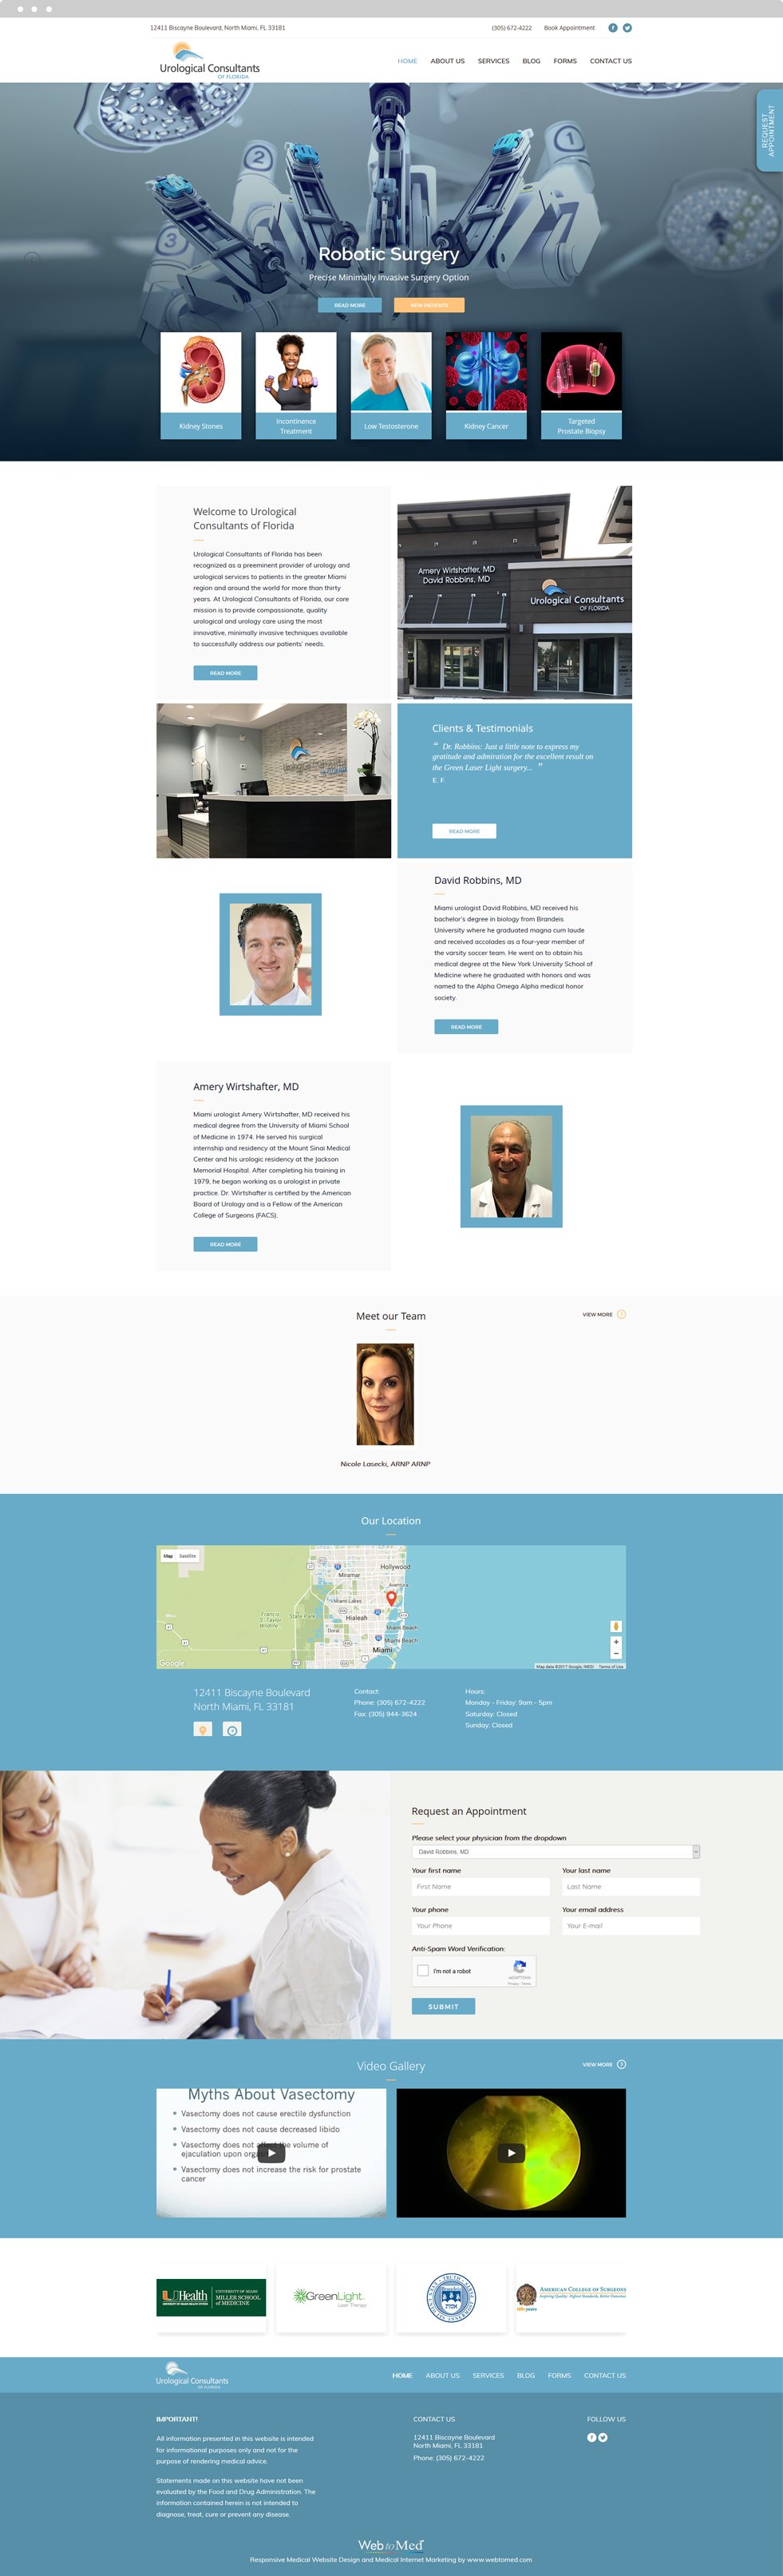 Urology Website Design - Urological Consultants of Florida - Homepage